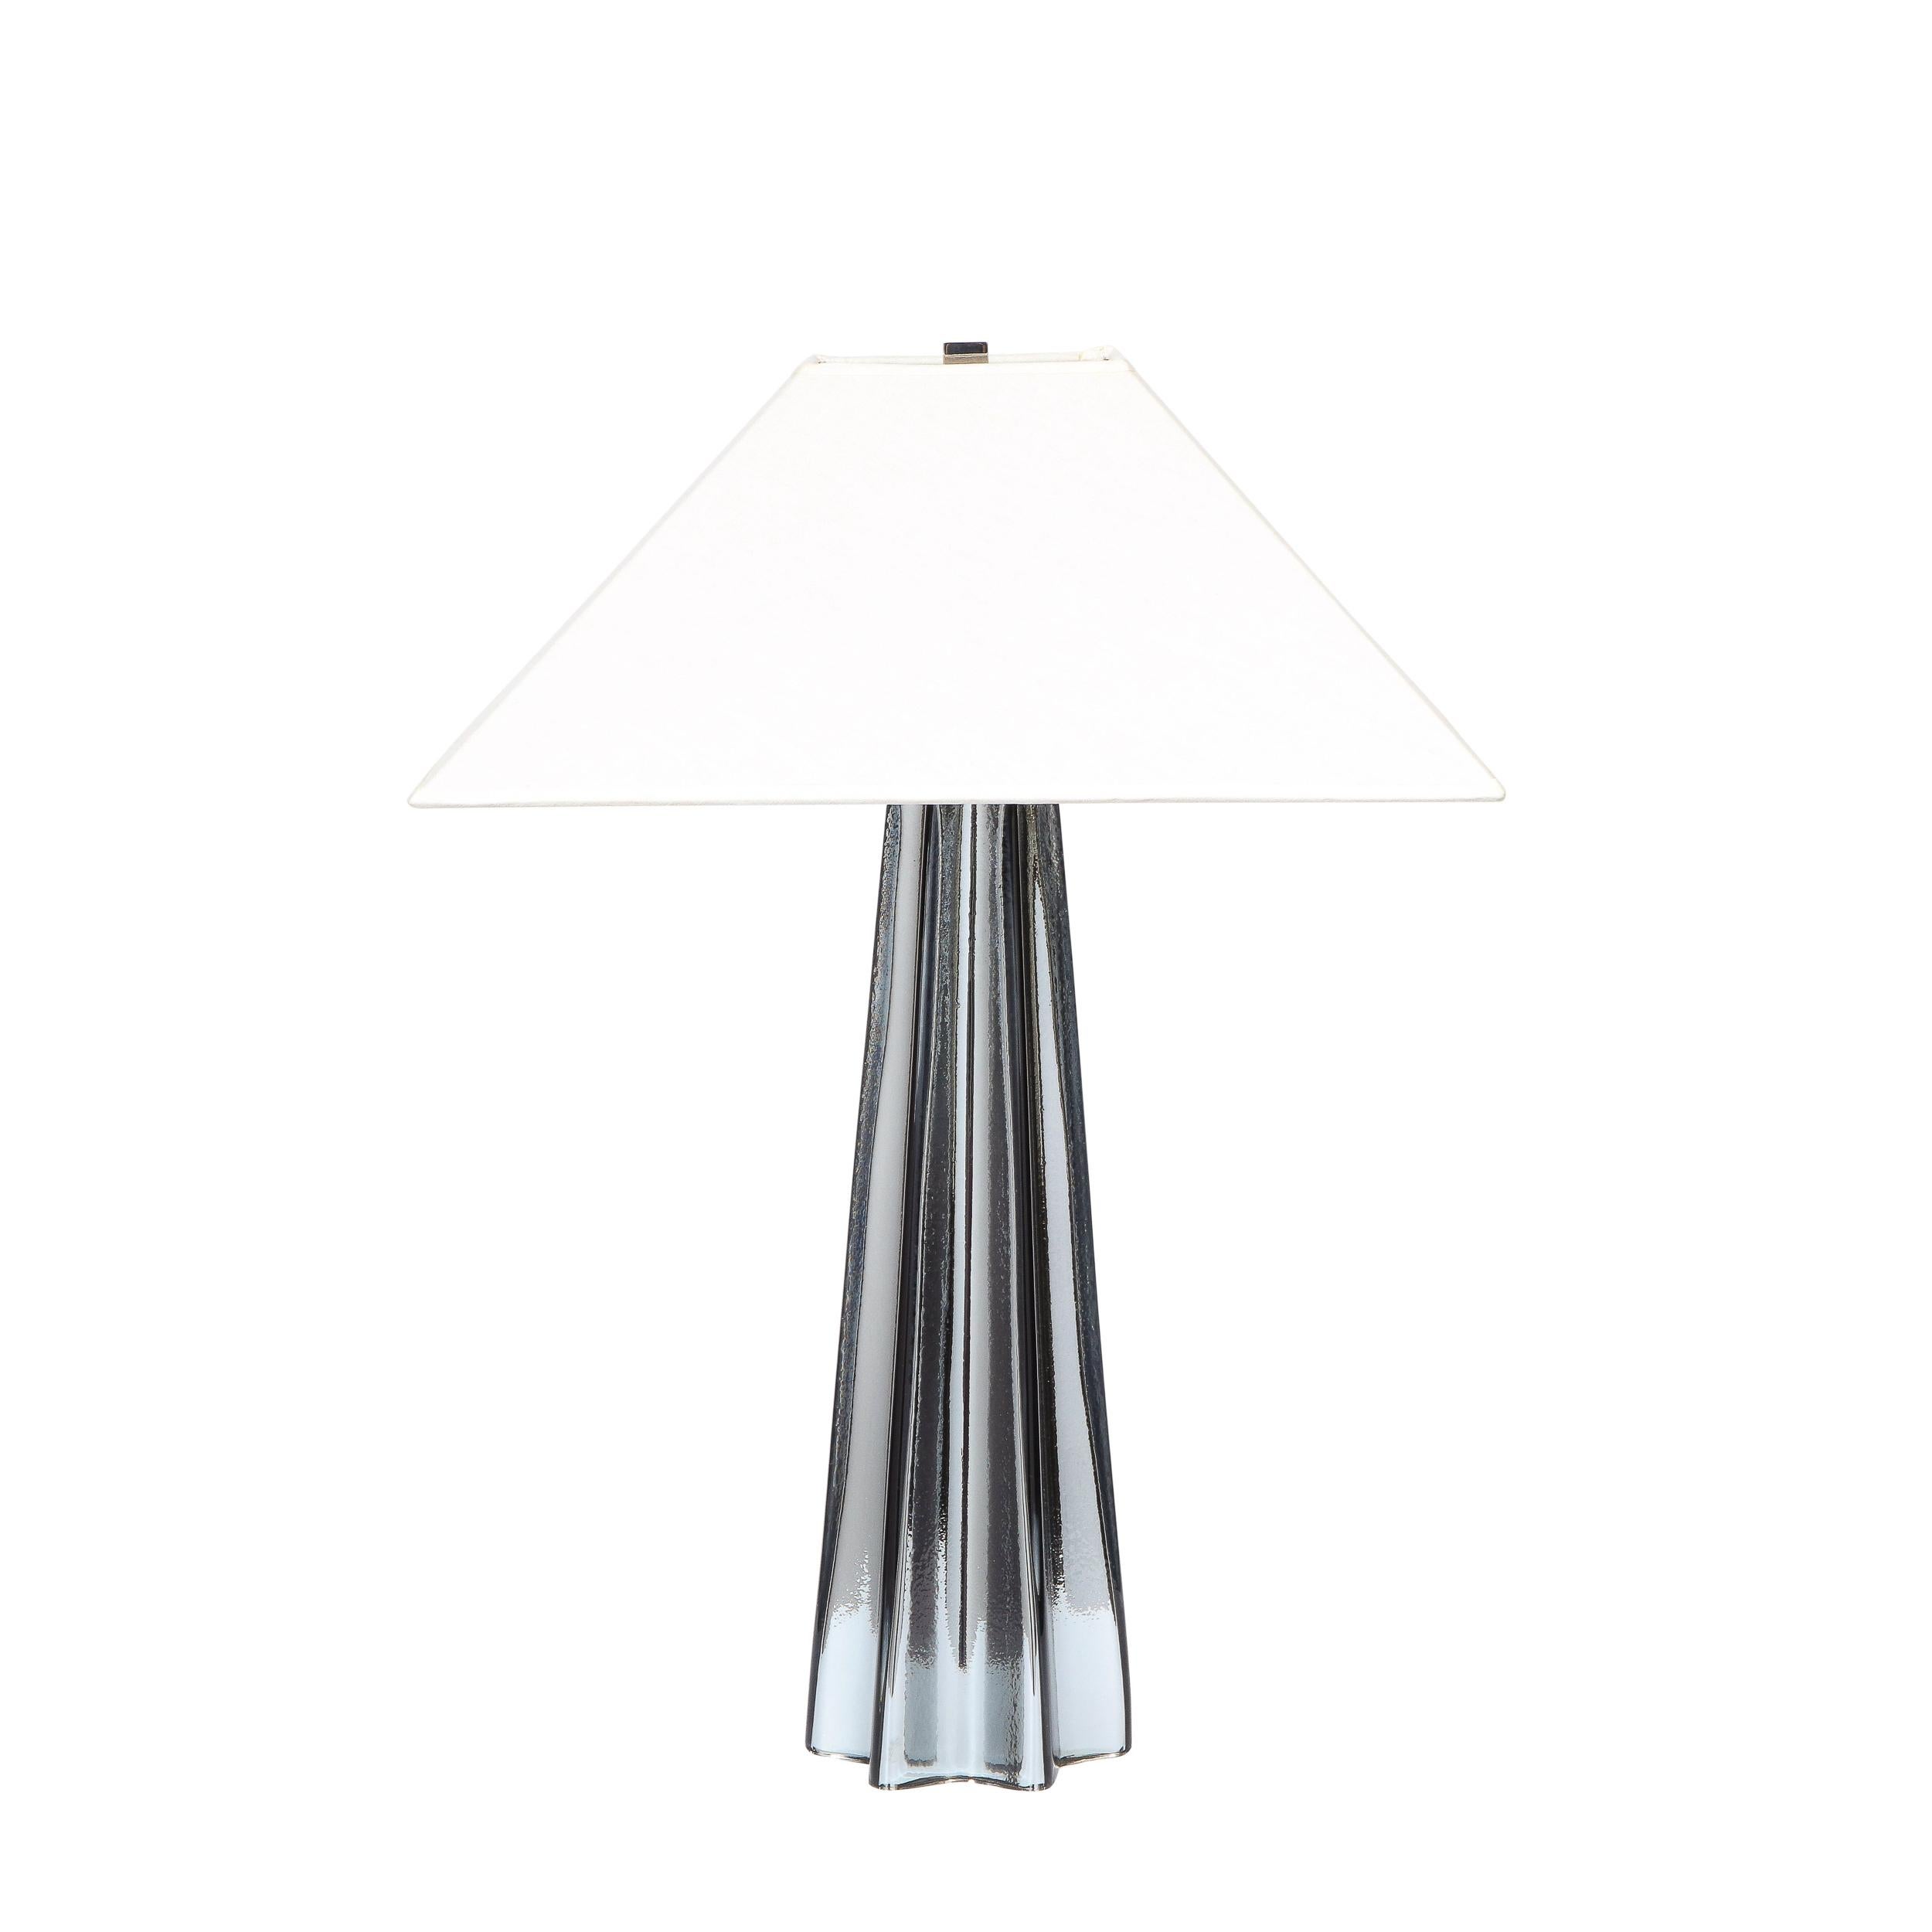 Italian Modernist Pair of Handblown X-Form Lamps in Handblown Murano Mercury Glass For Sale